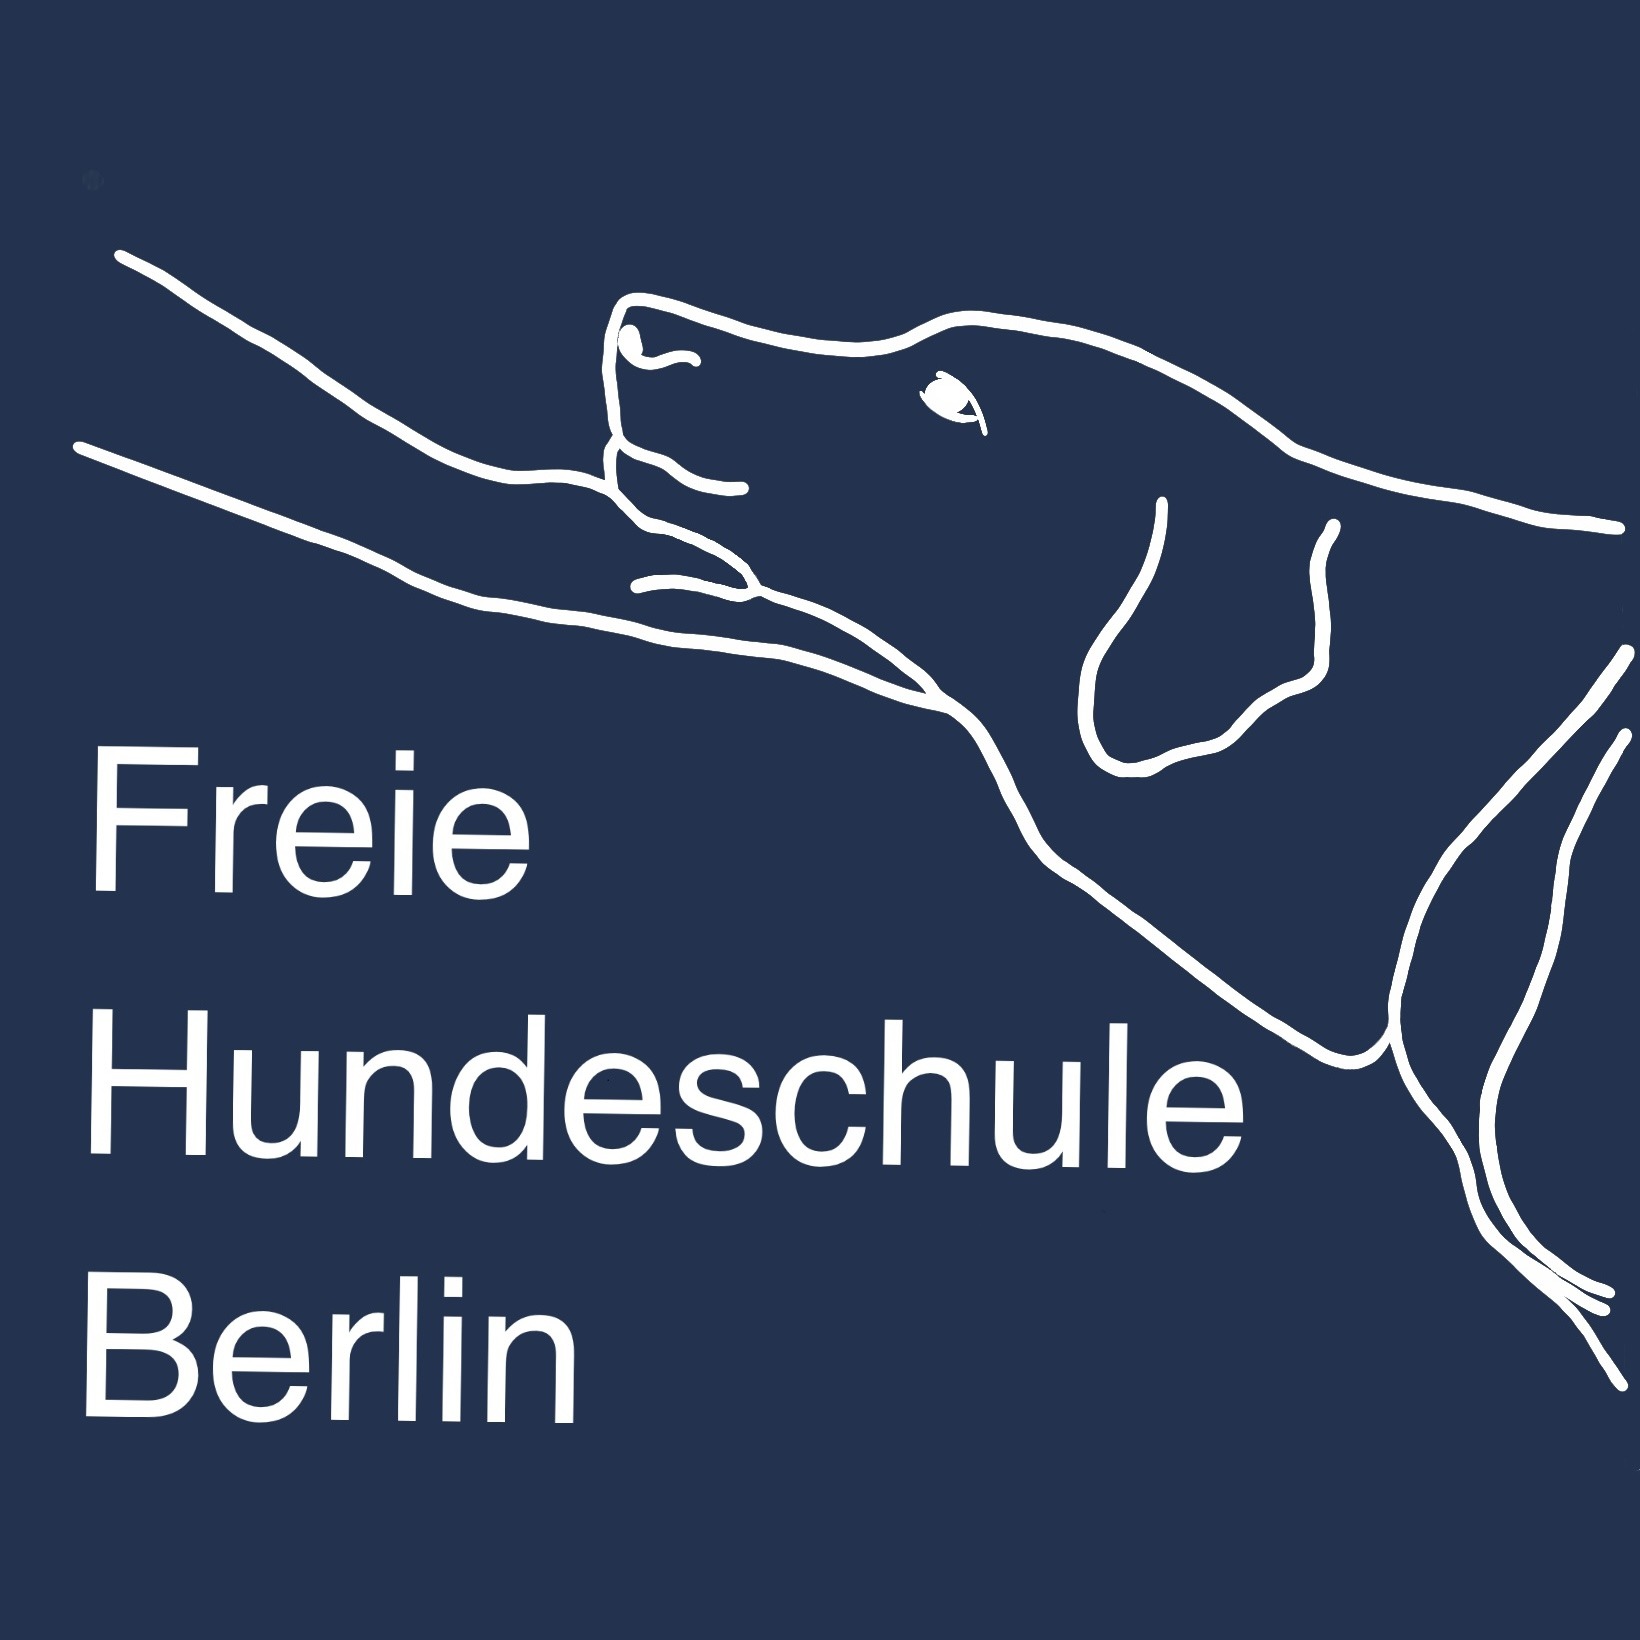 Freie Hundeschule Berlin